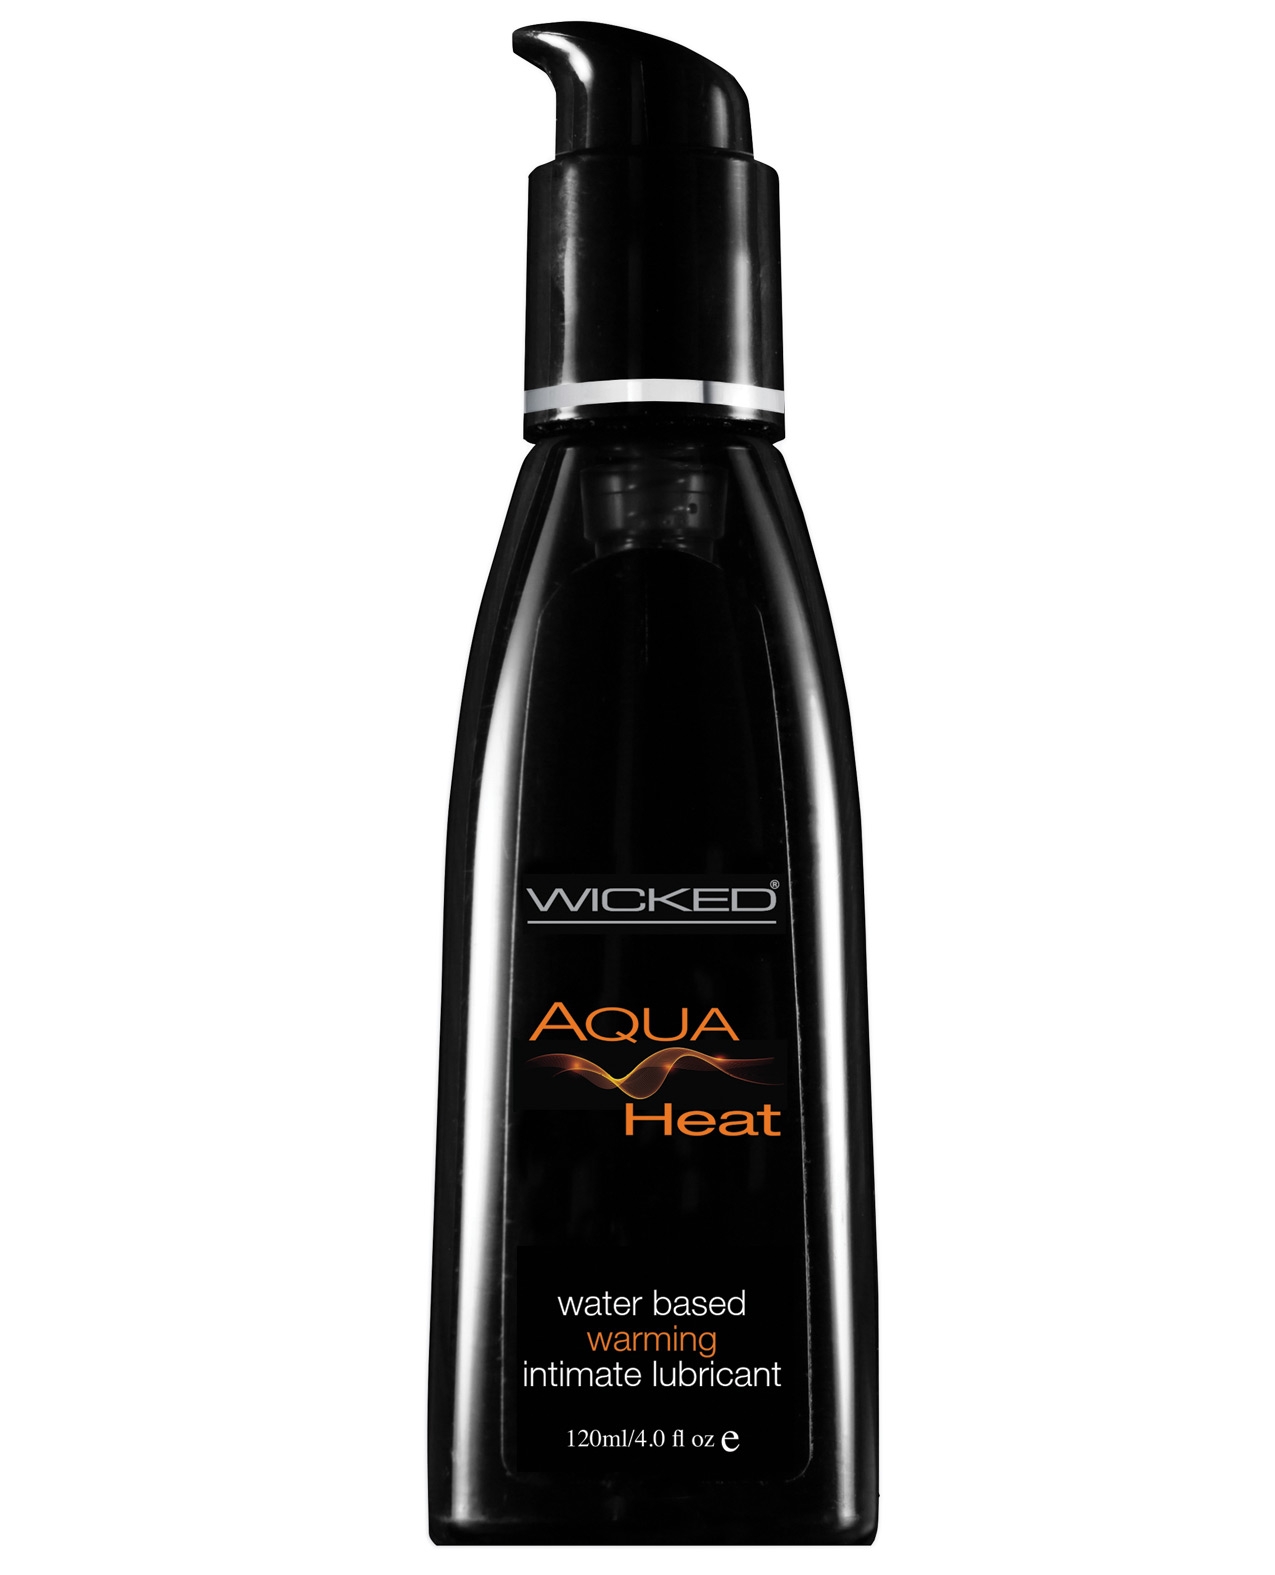 Aquaheat Hot/Warm Heat Packs